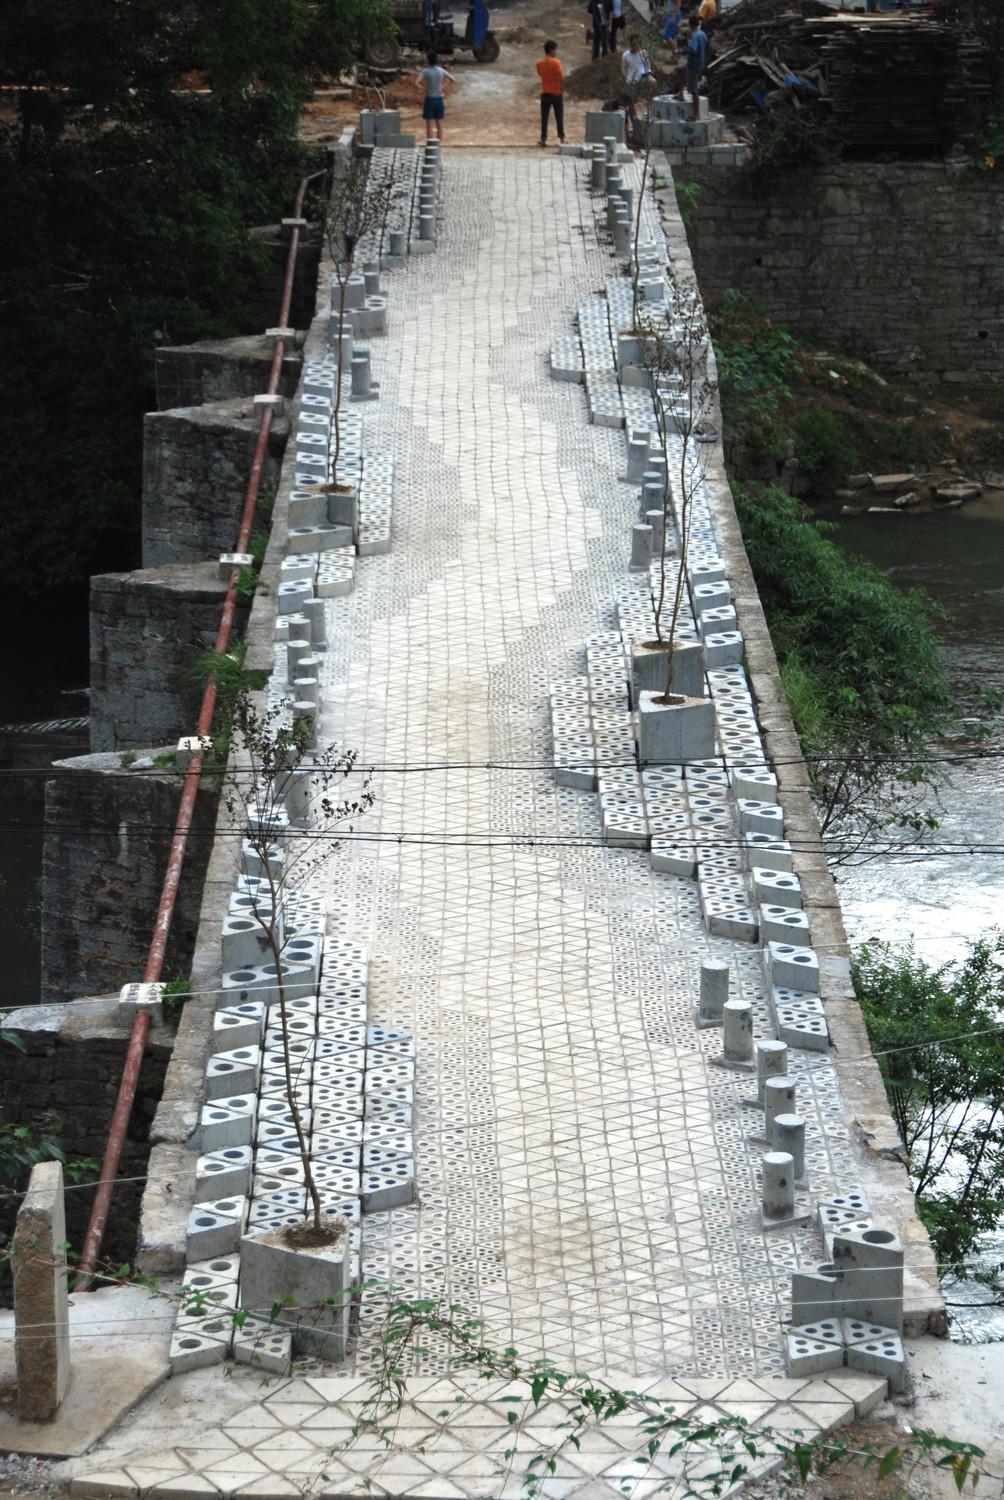 Bridge surface complete before planting